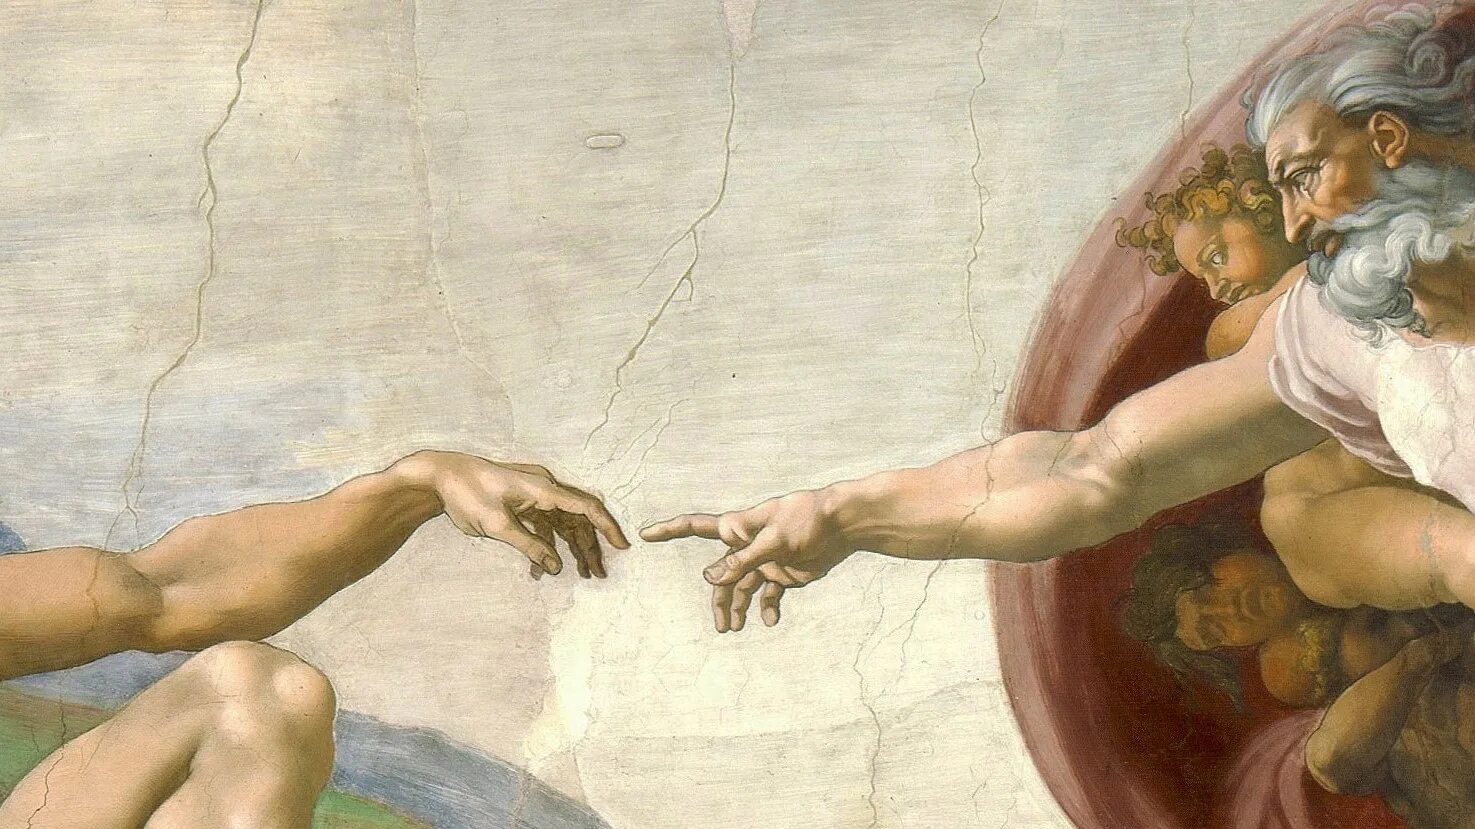 Микеланджело Сотворение Адама. "Сотворение Адама" Микеланджело, 1511. Микеланджело Буонарроти руки. Микеланджело Буонарроти Сотворение Адама руки.